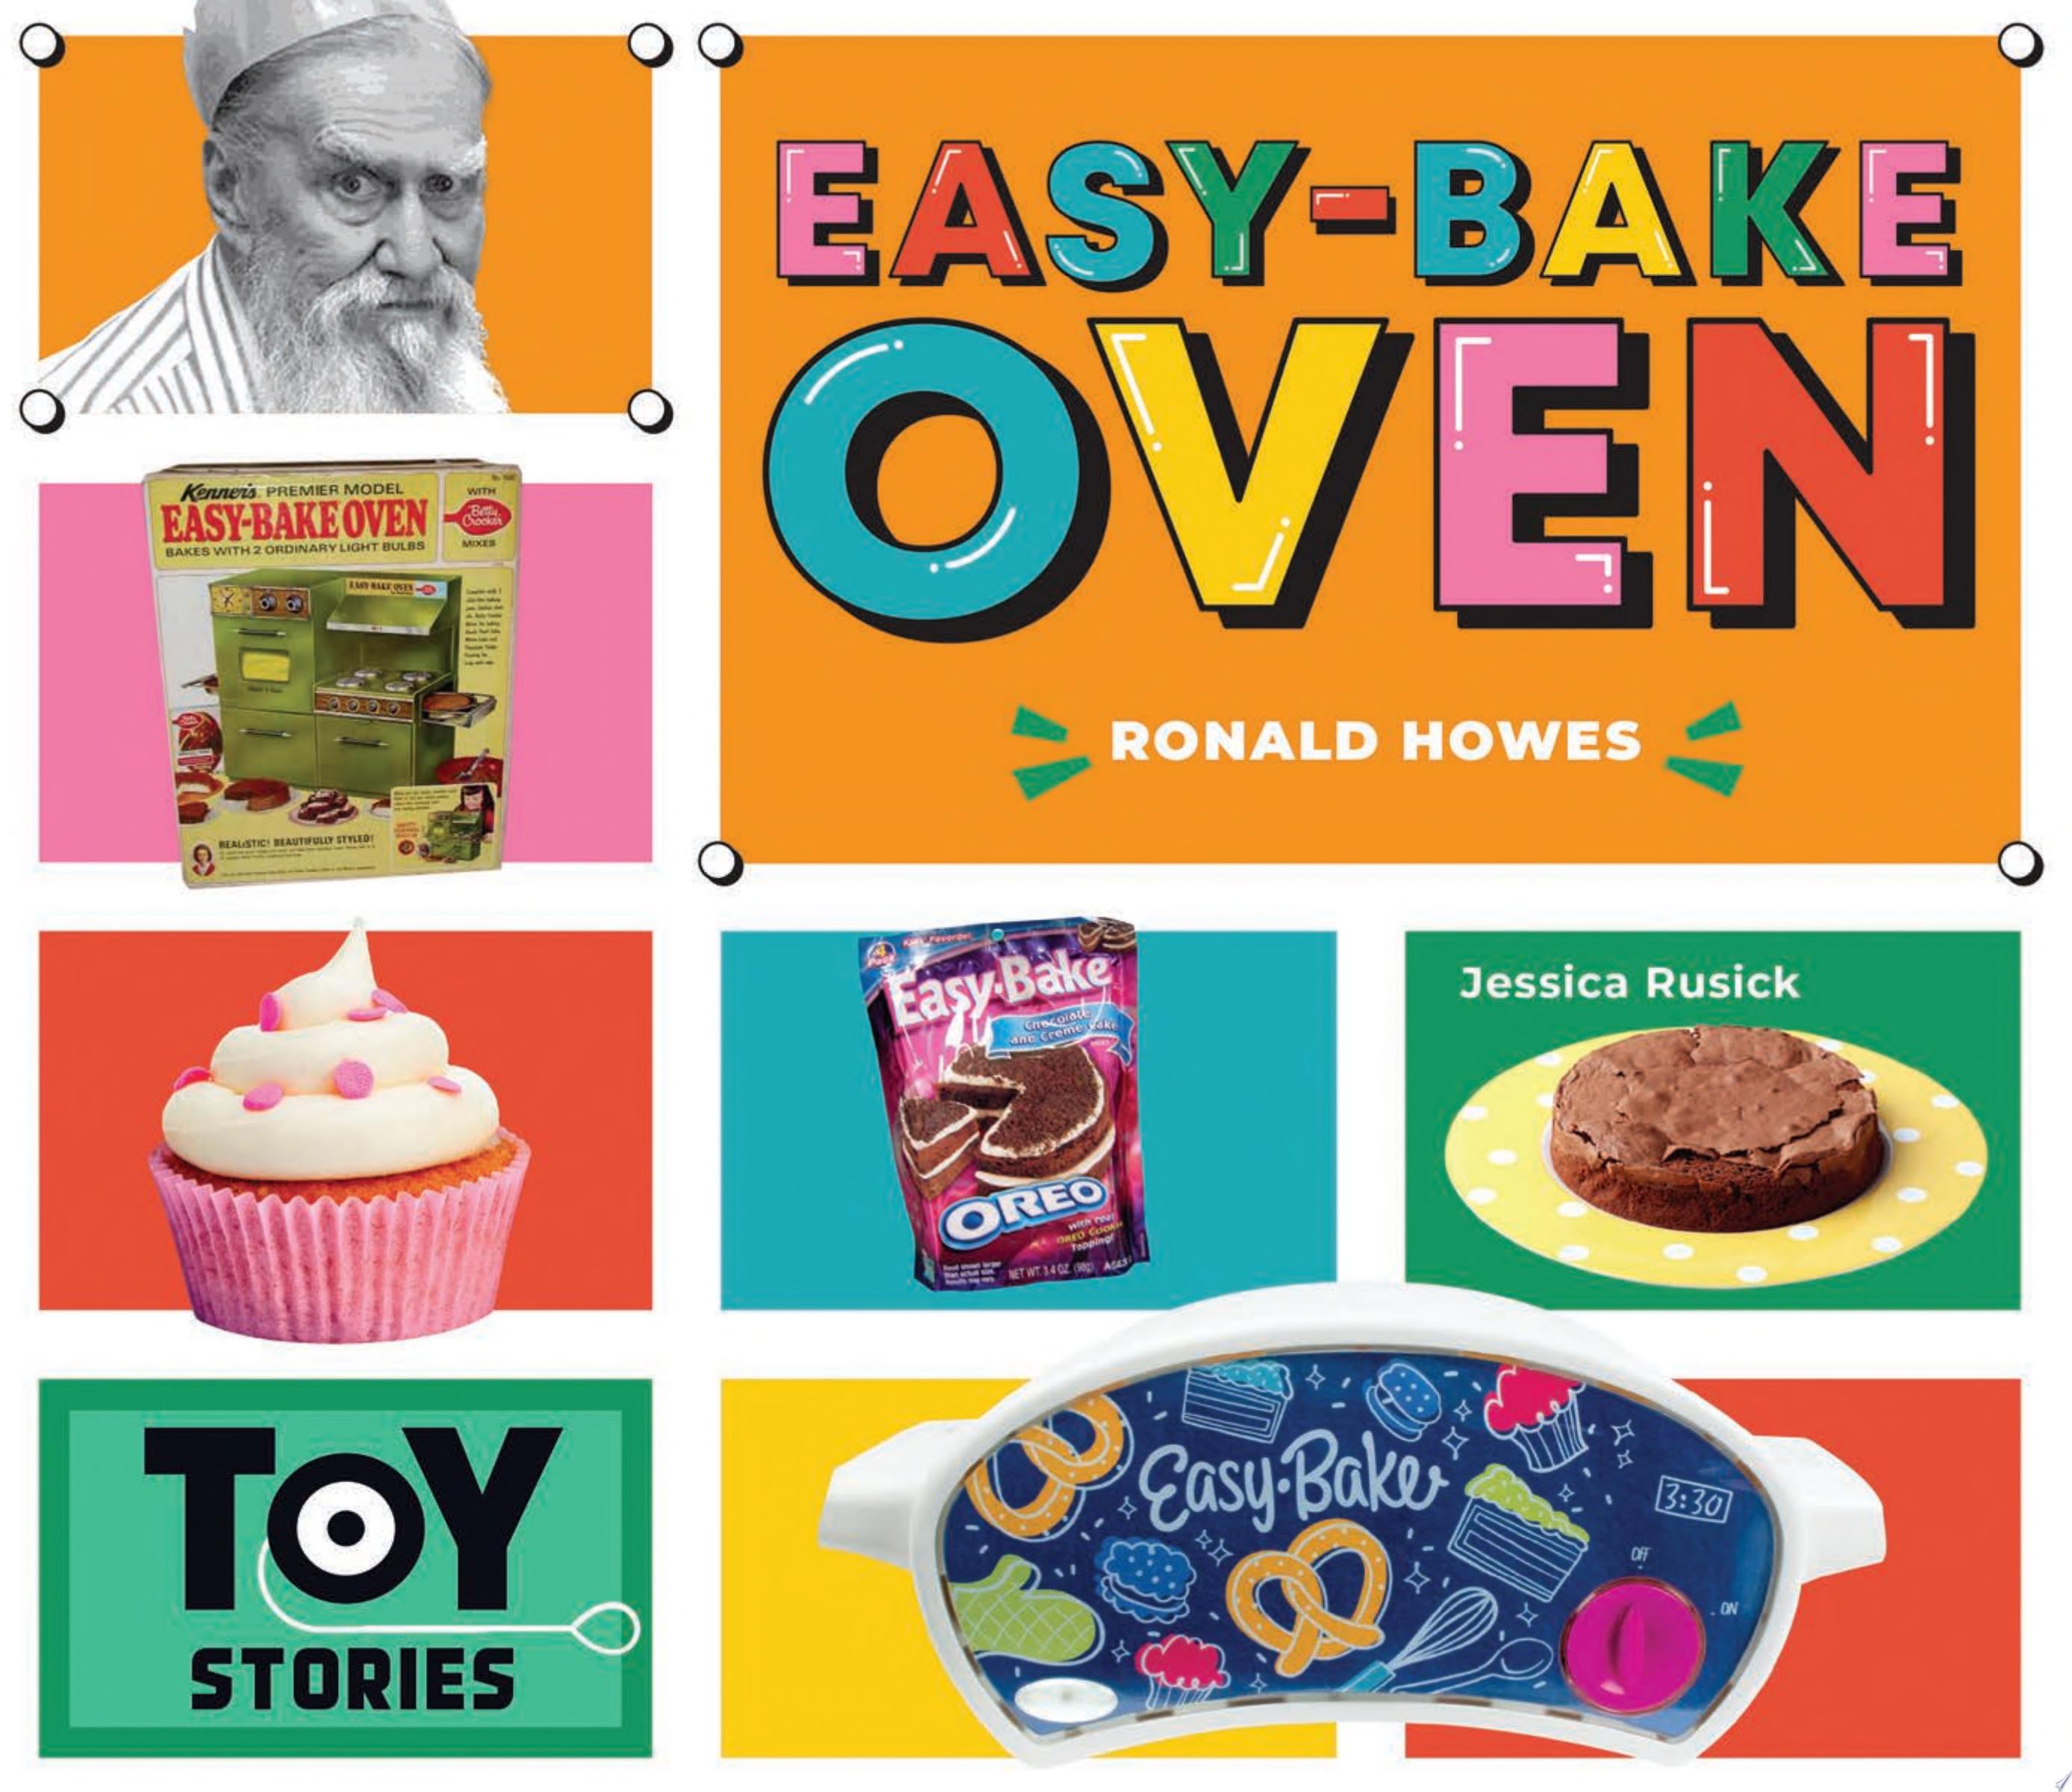 Image for "Easy-Bake Oven"